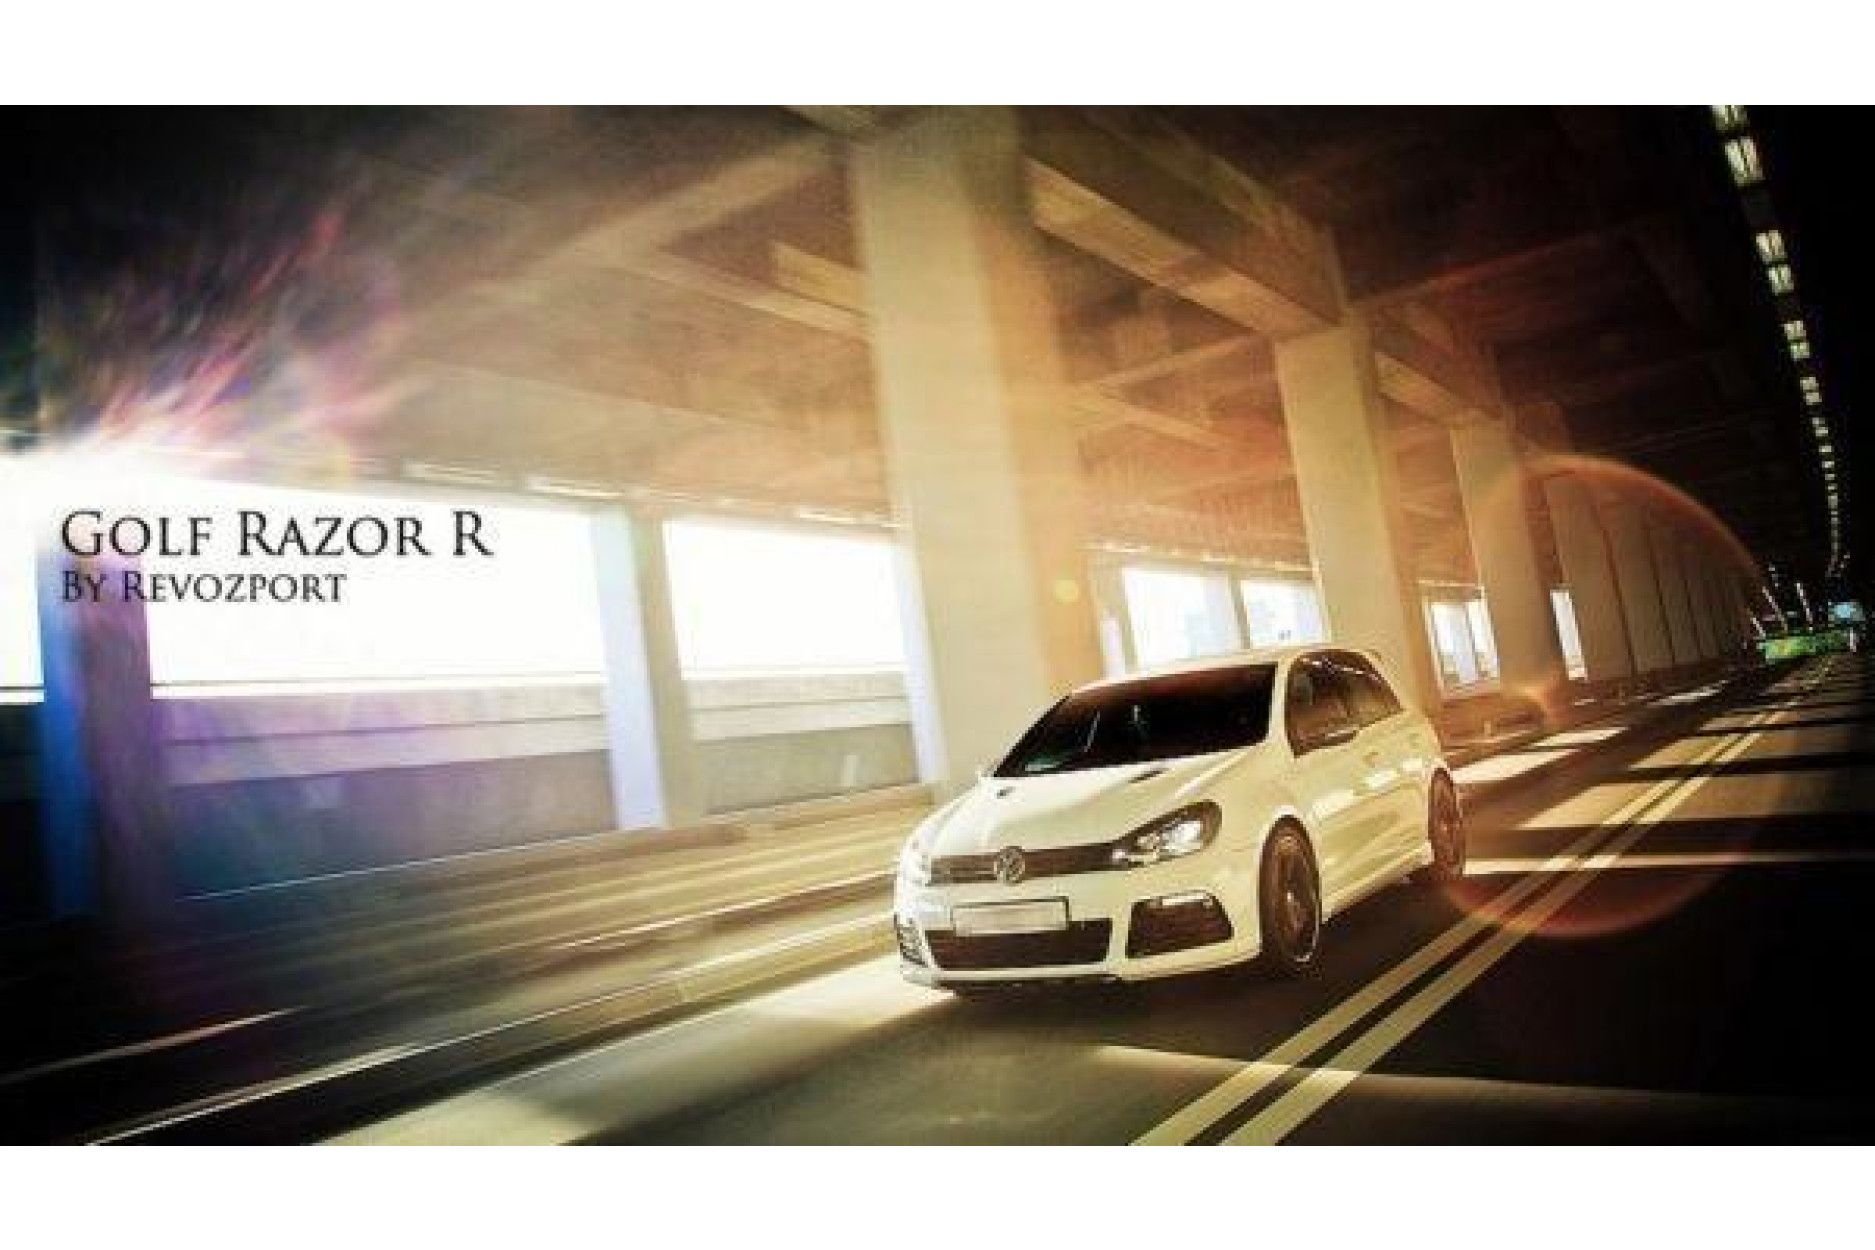 RevoZport Carbon Bodykit for Volkswagen Golf MK6|Golf 6 R "Razor"